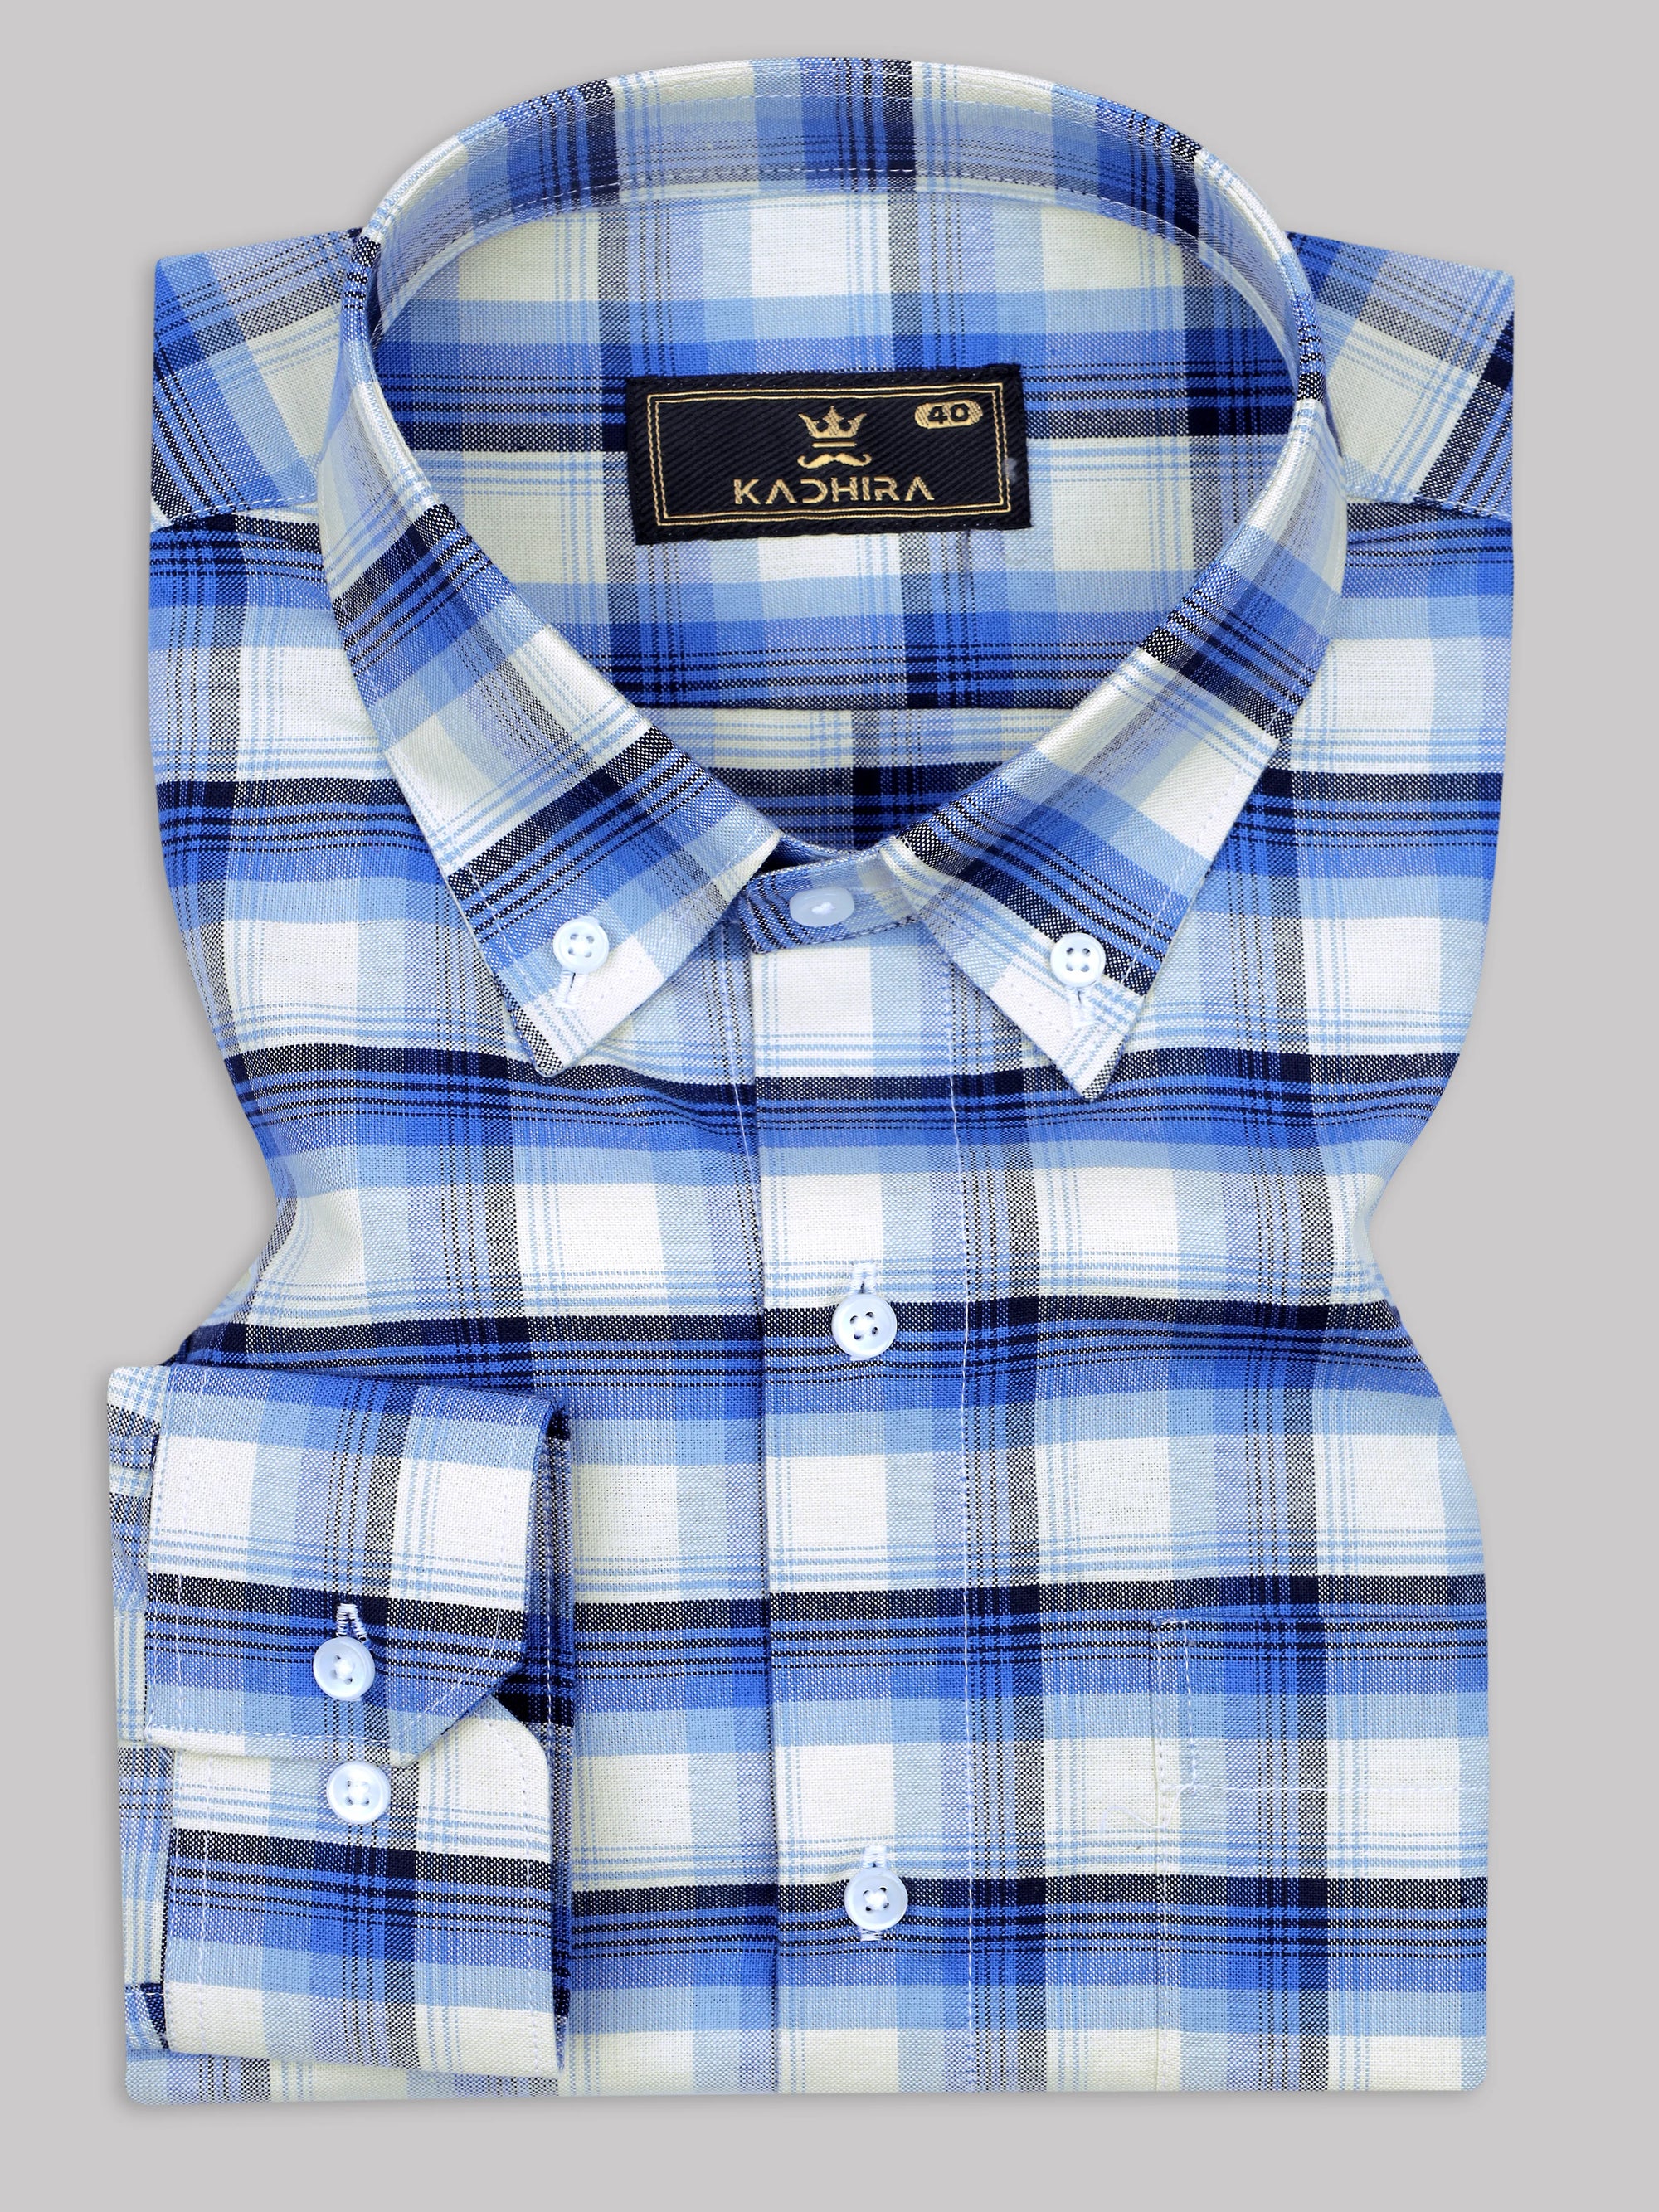 Ultramarine Blue With Navy Plaid Button Down Premium Cotton Shirt